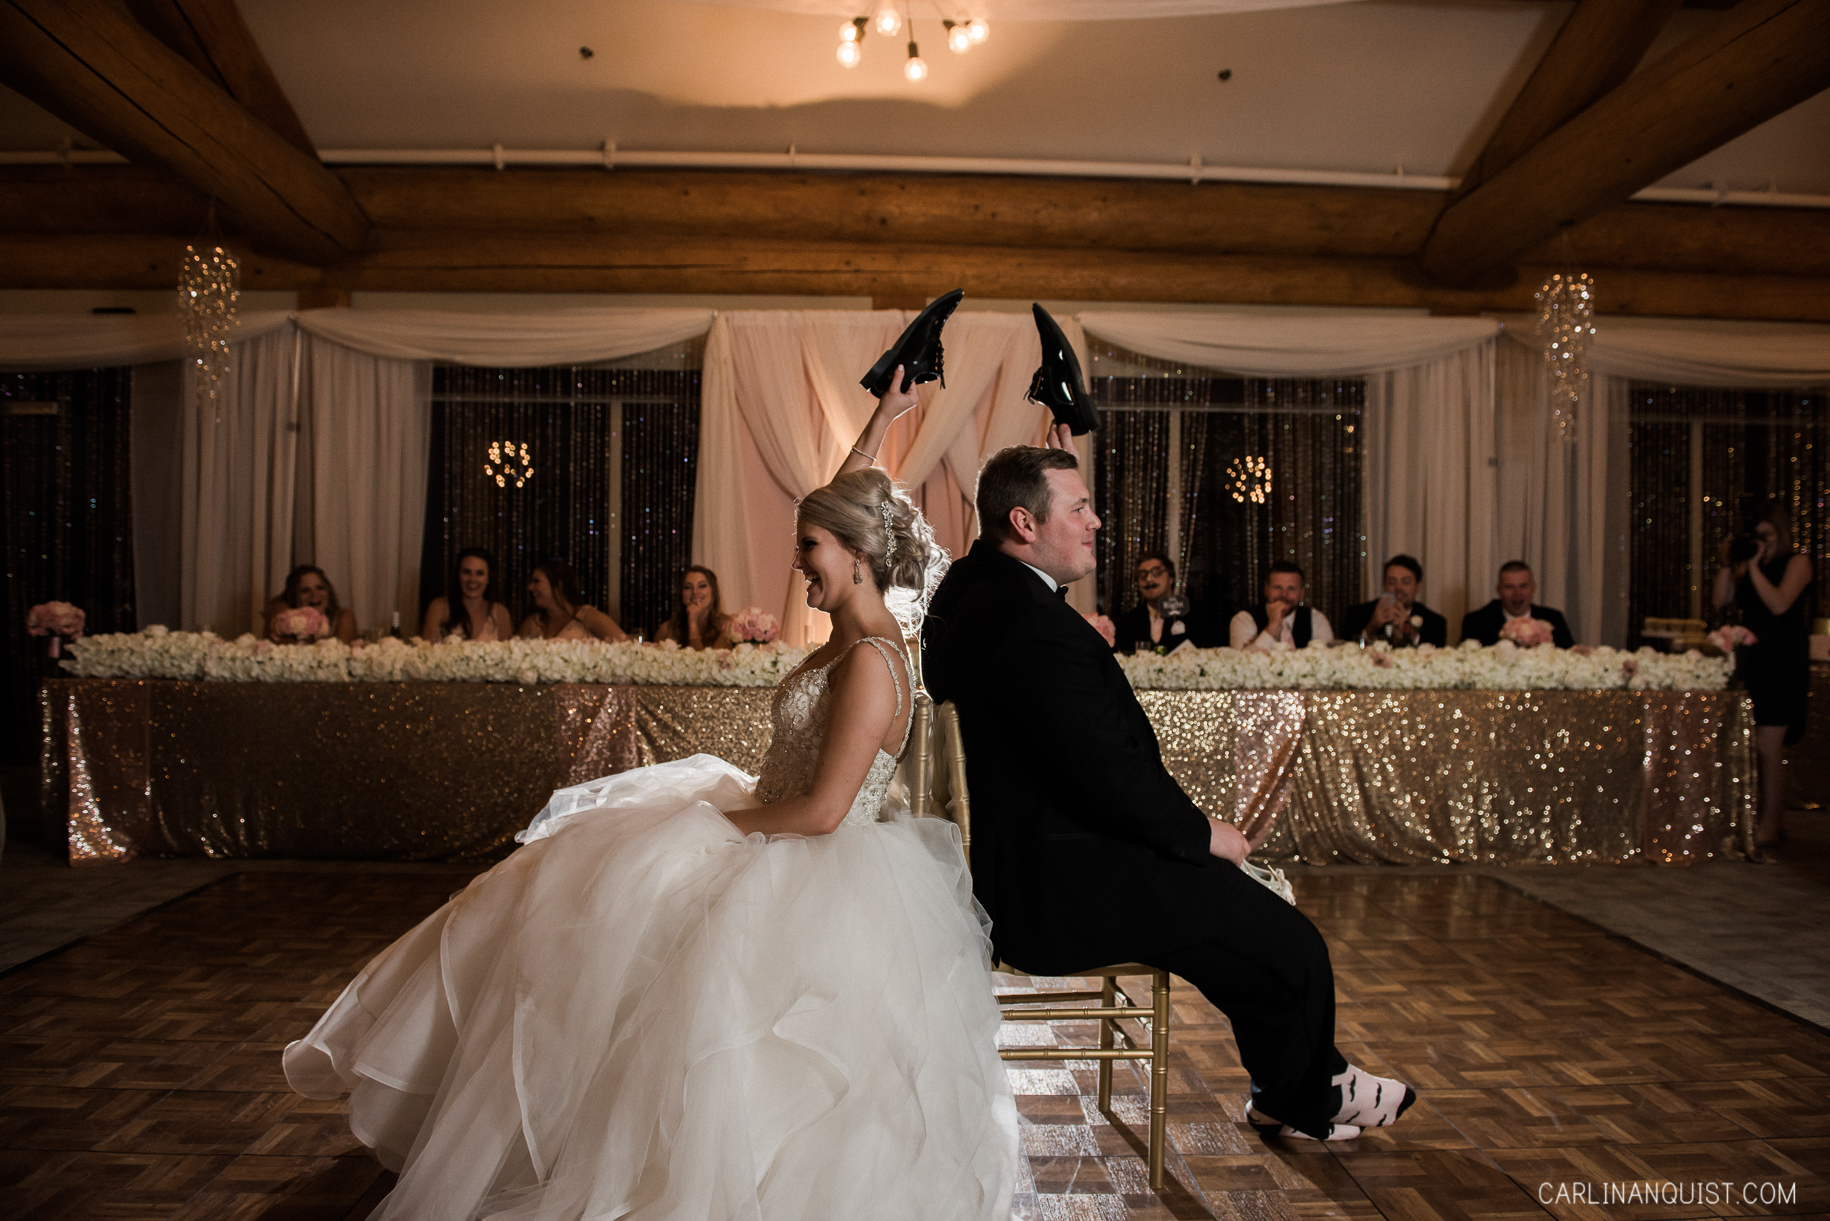 Carlin Anquist | Apple Creek Wedding Photographer | The Shoe Game